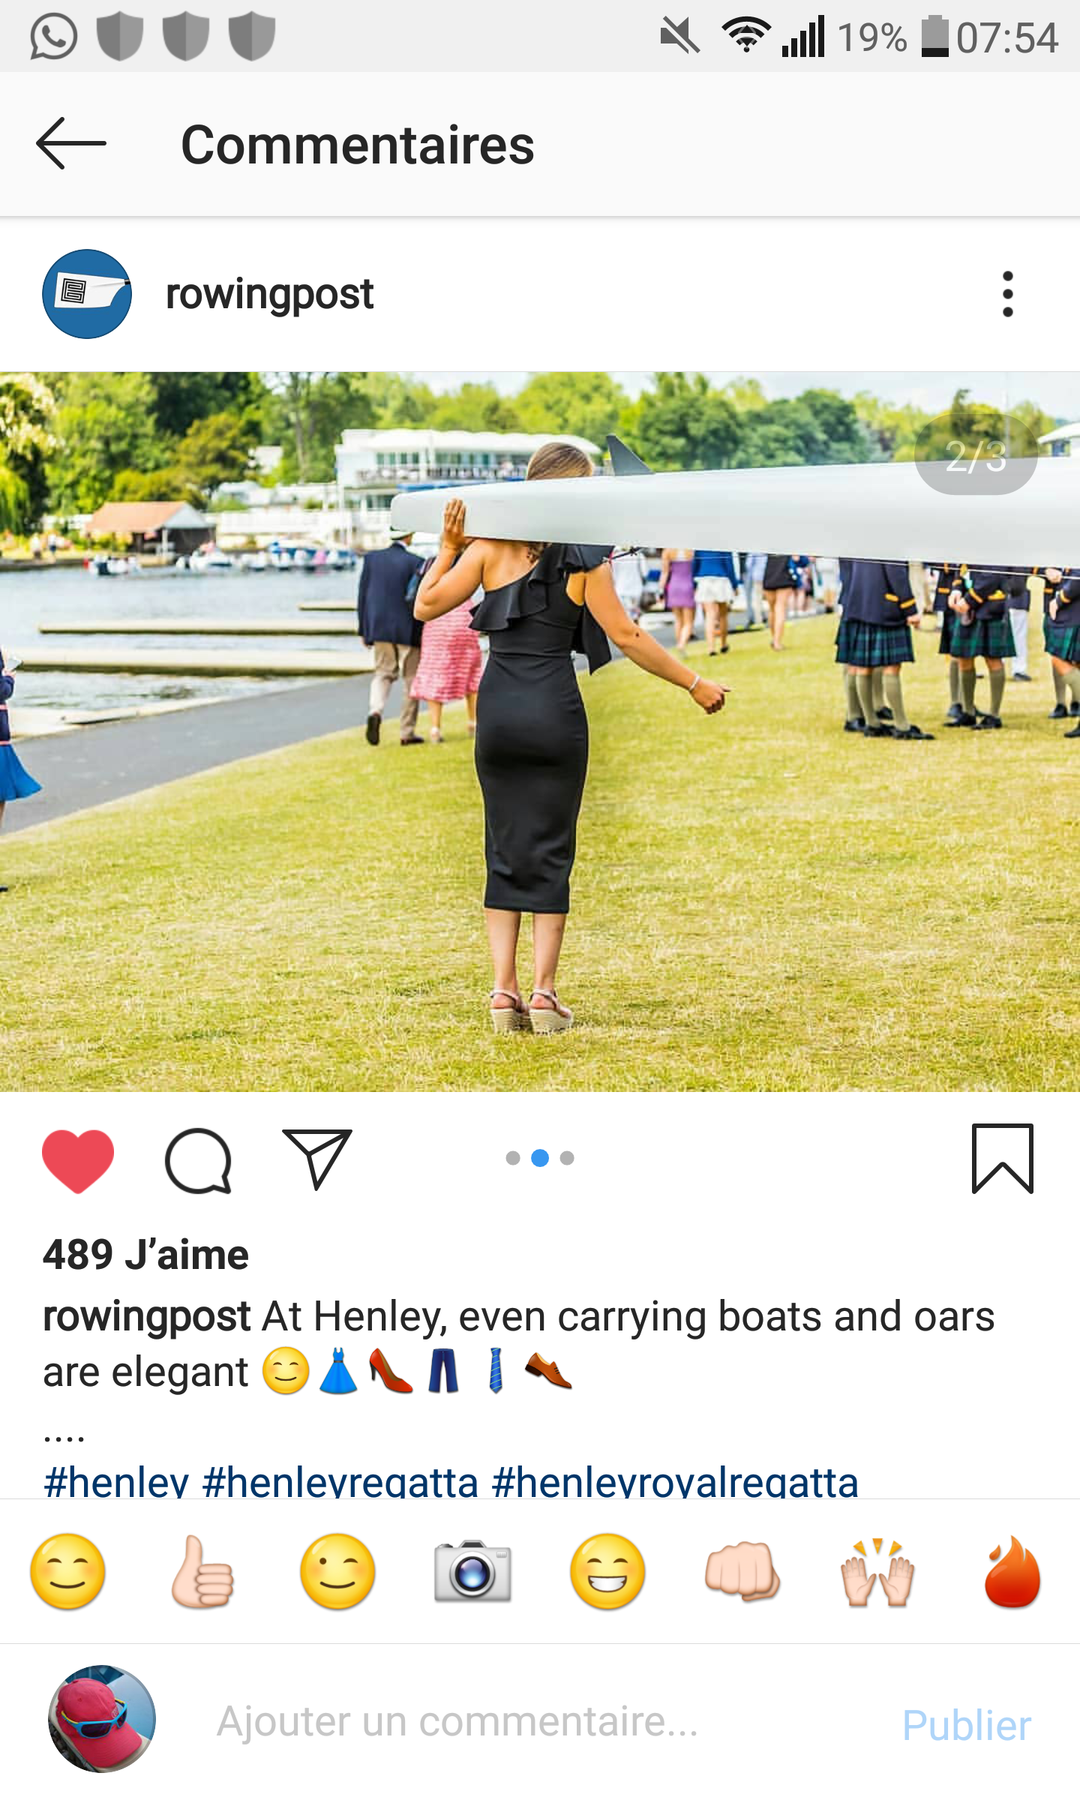 Rowingpost